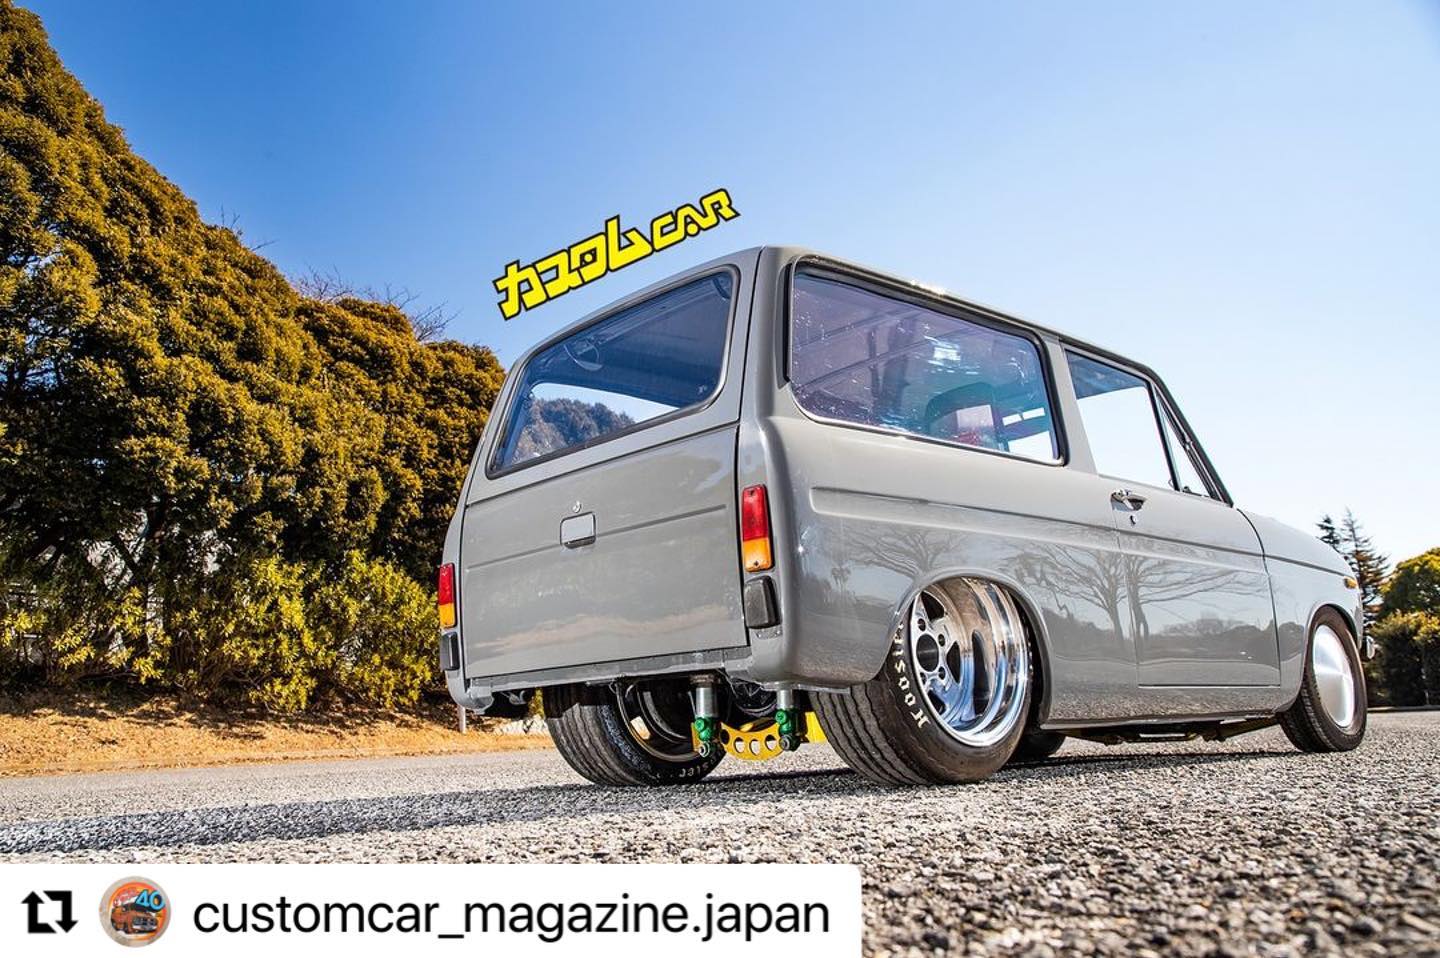 #Repost @customcar_magazine.japan with @make_repost・・・PORTER.サブロク軽にあるまじき極太ホイールを飲み込む! プロストリートスタイルに生まれ変わったポーター。SOURCE.@bodyshop_dmc PHOTO.@datsunder #カスタムcar #カスタムカー #customcar #dmc #sandaautocreate #trinity #ポーター #porter #keivan #軽バン #プロストリート #prostreet 激低、US的、最旬、最新!軽バン軽トラカスタムが目白推し『カスタムCAR 4月号』はプロフィールのリンク先からもお求めいただけます。